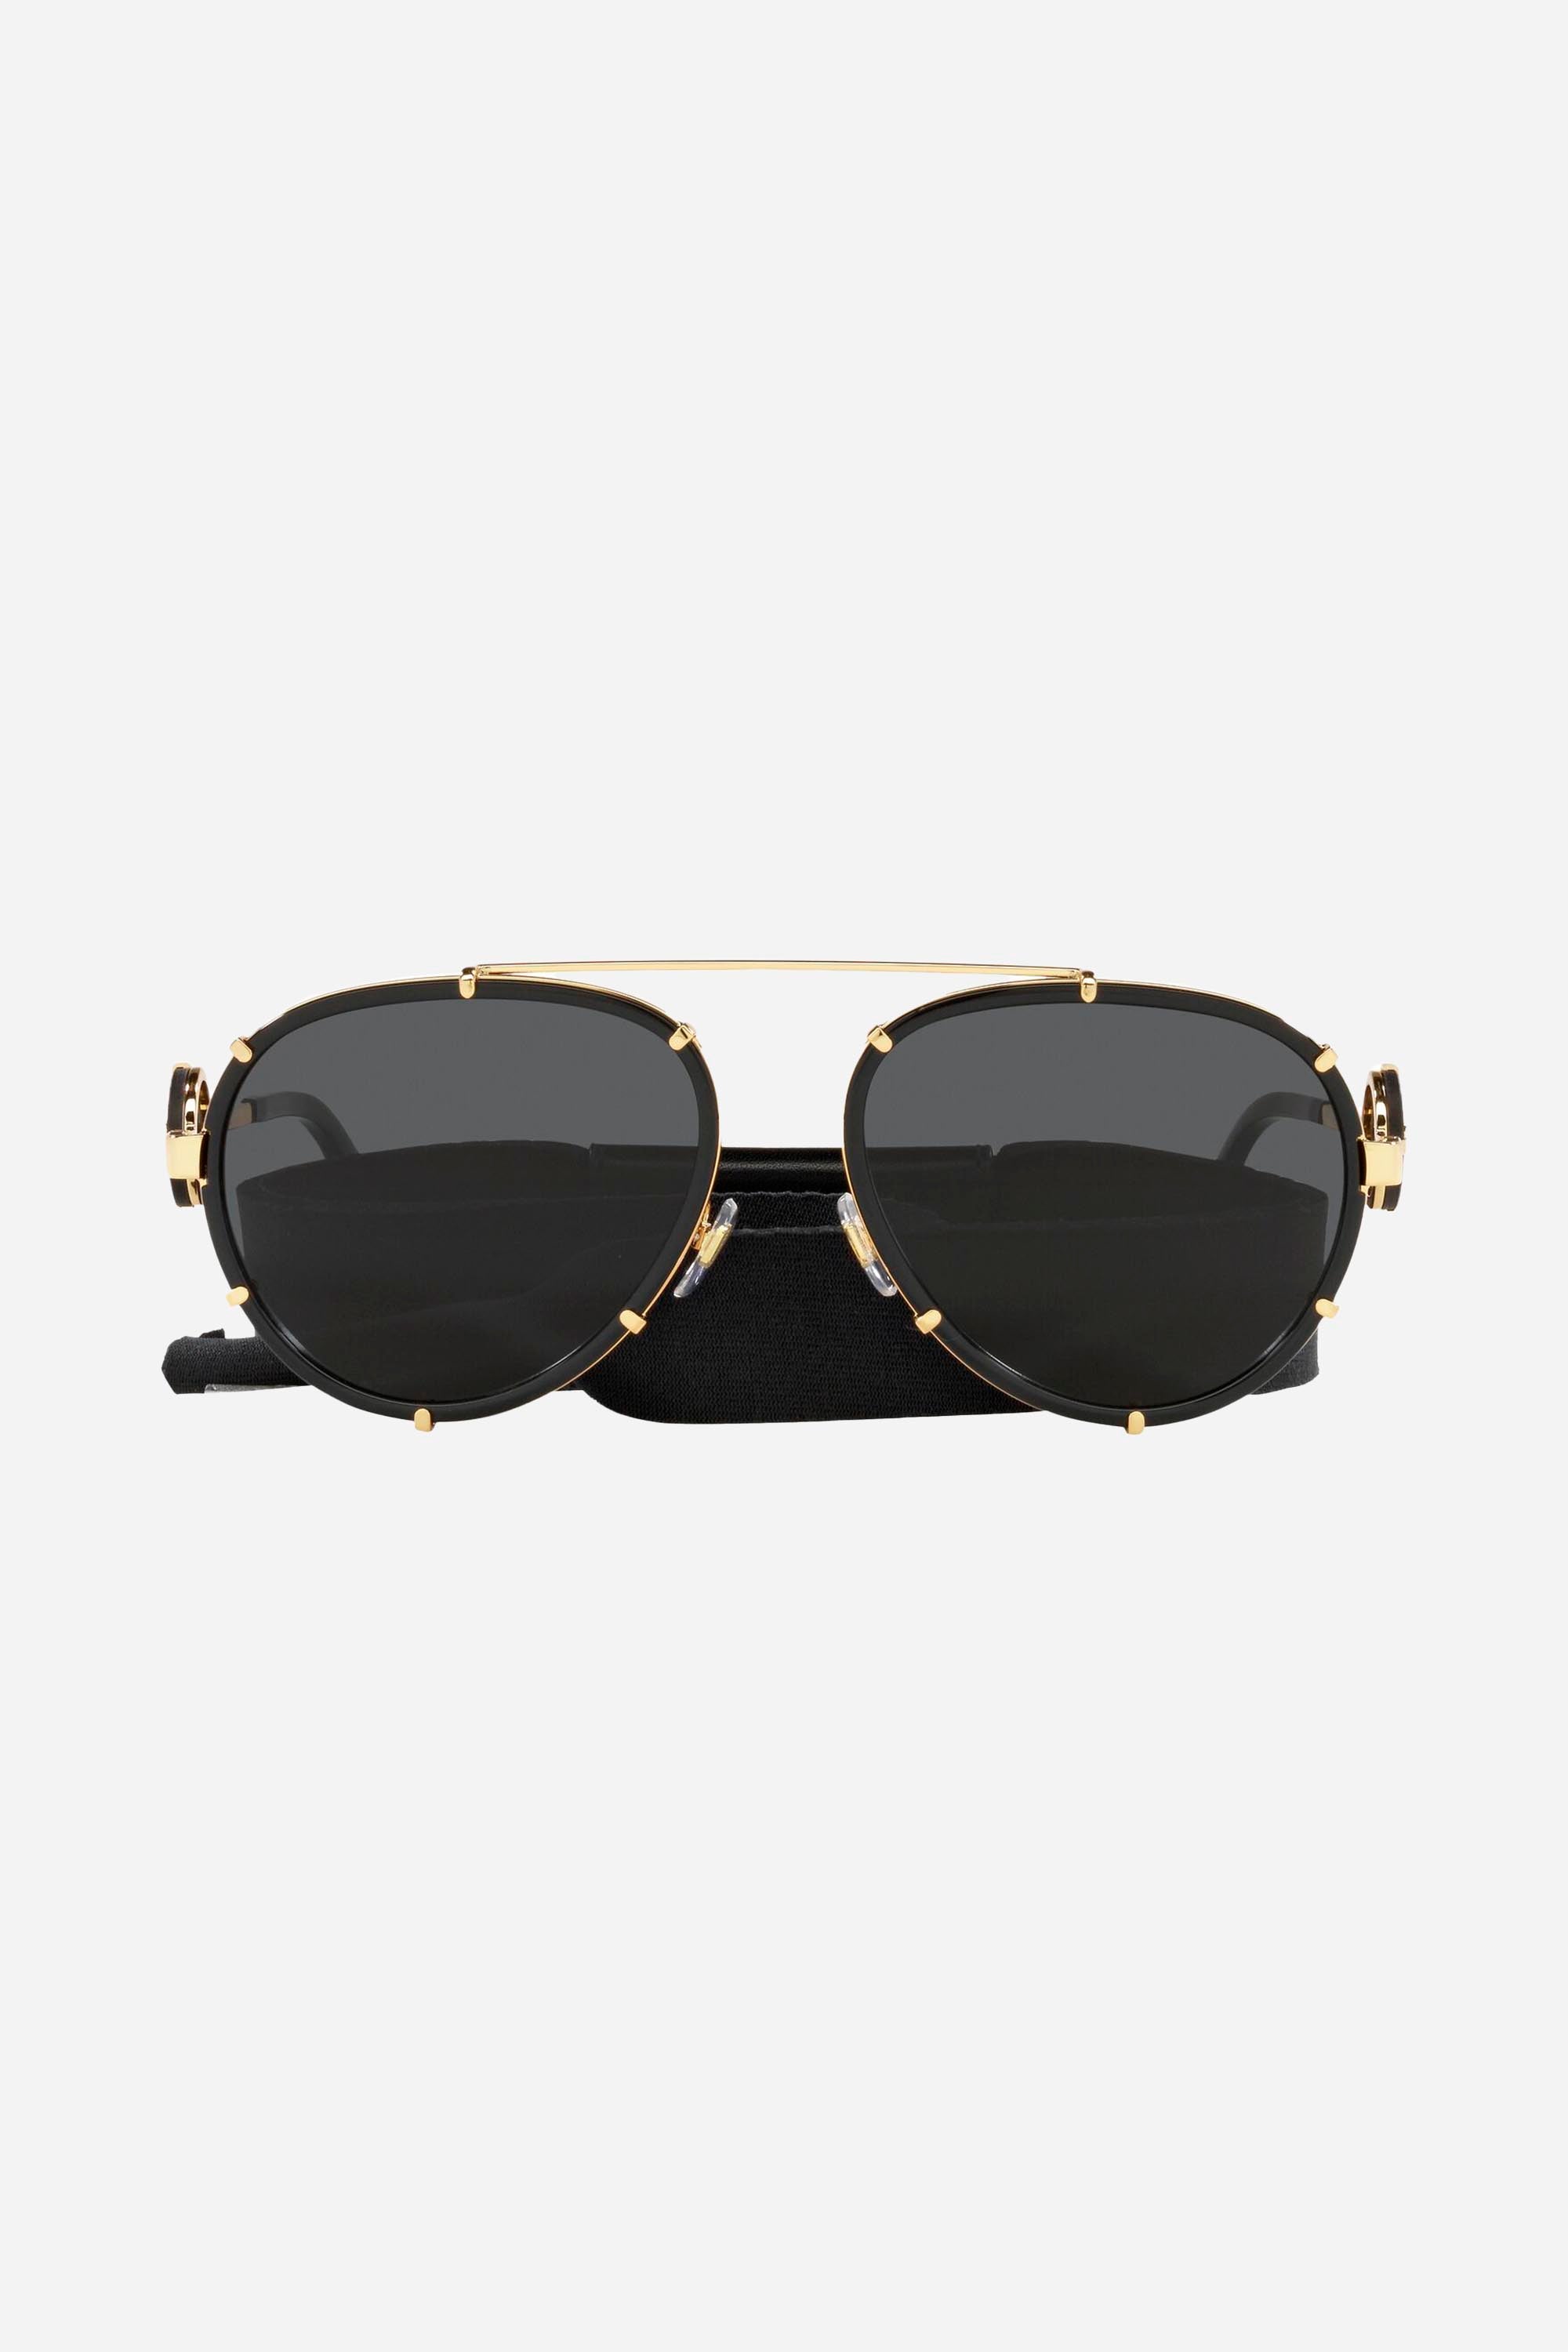 Versace pilot sunglasses - Eyewear Club